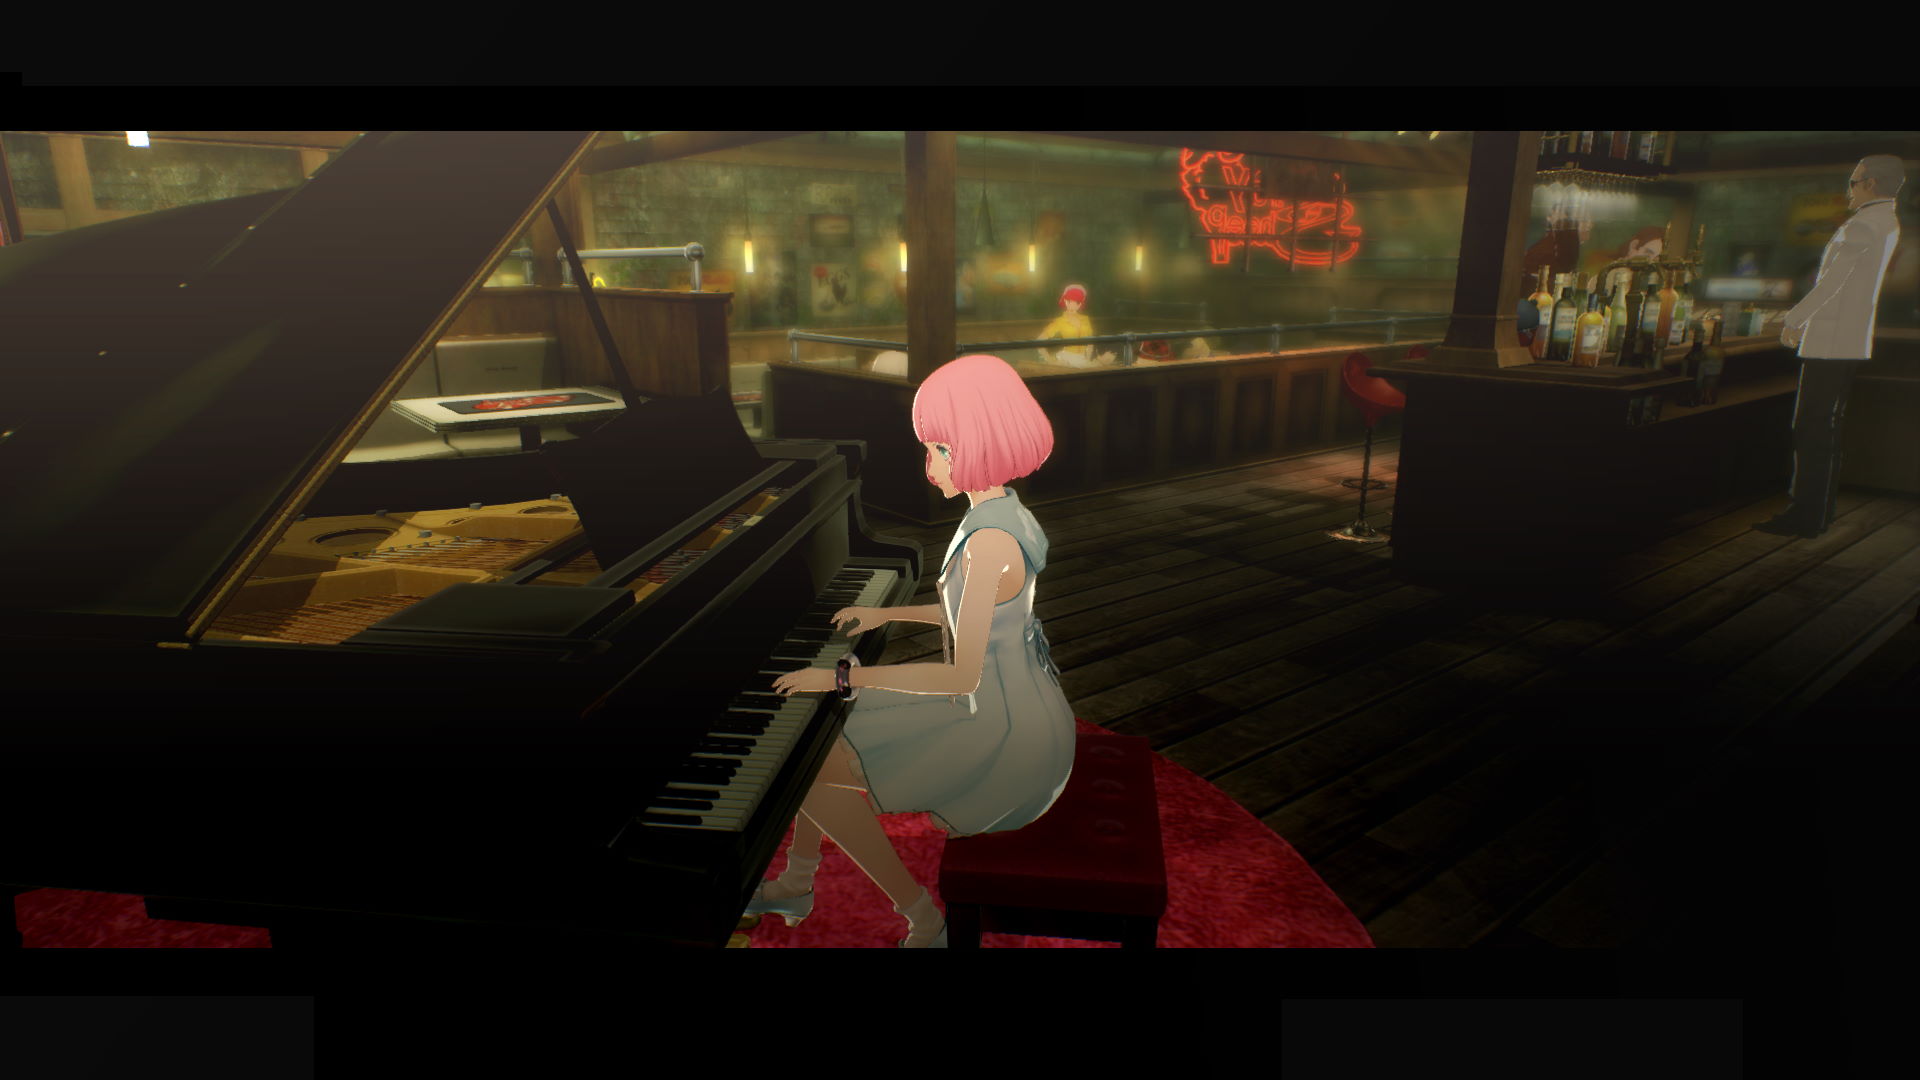 Qatherine playing piano